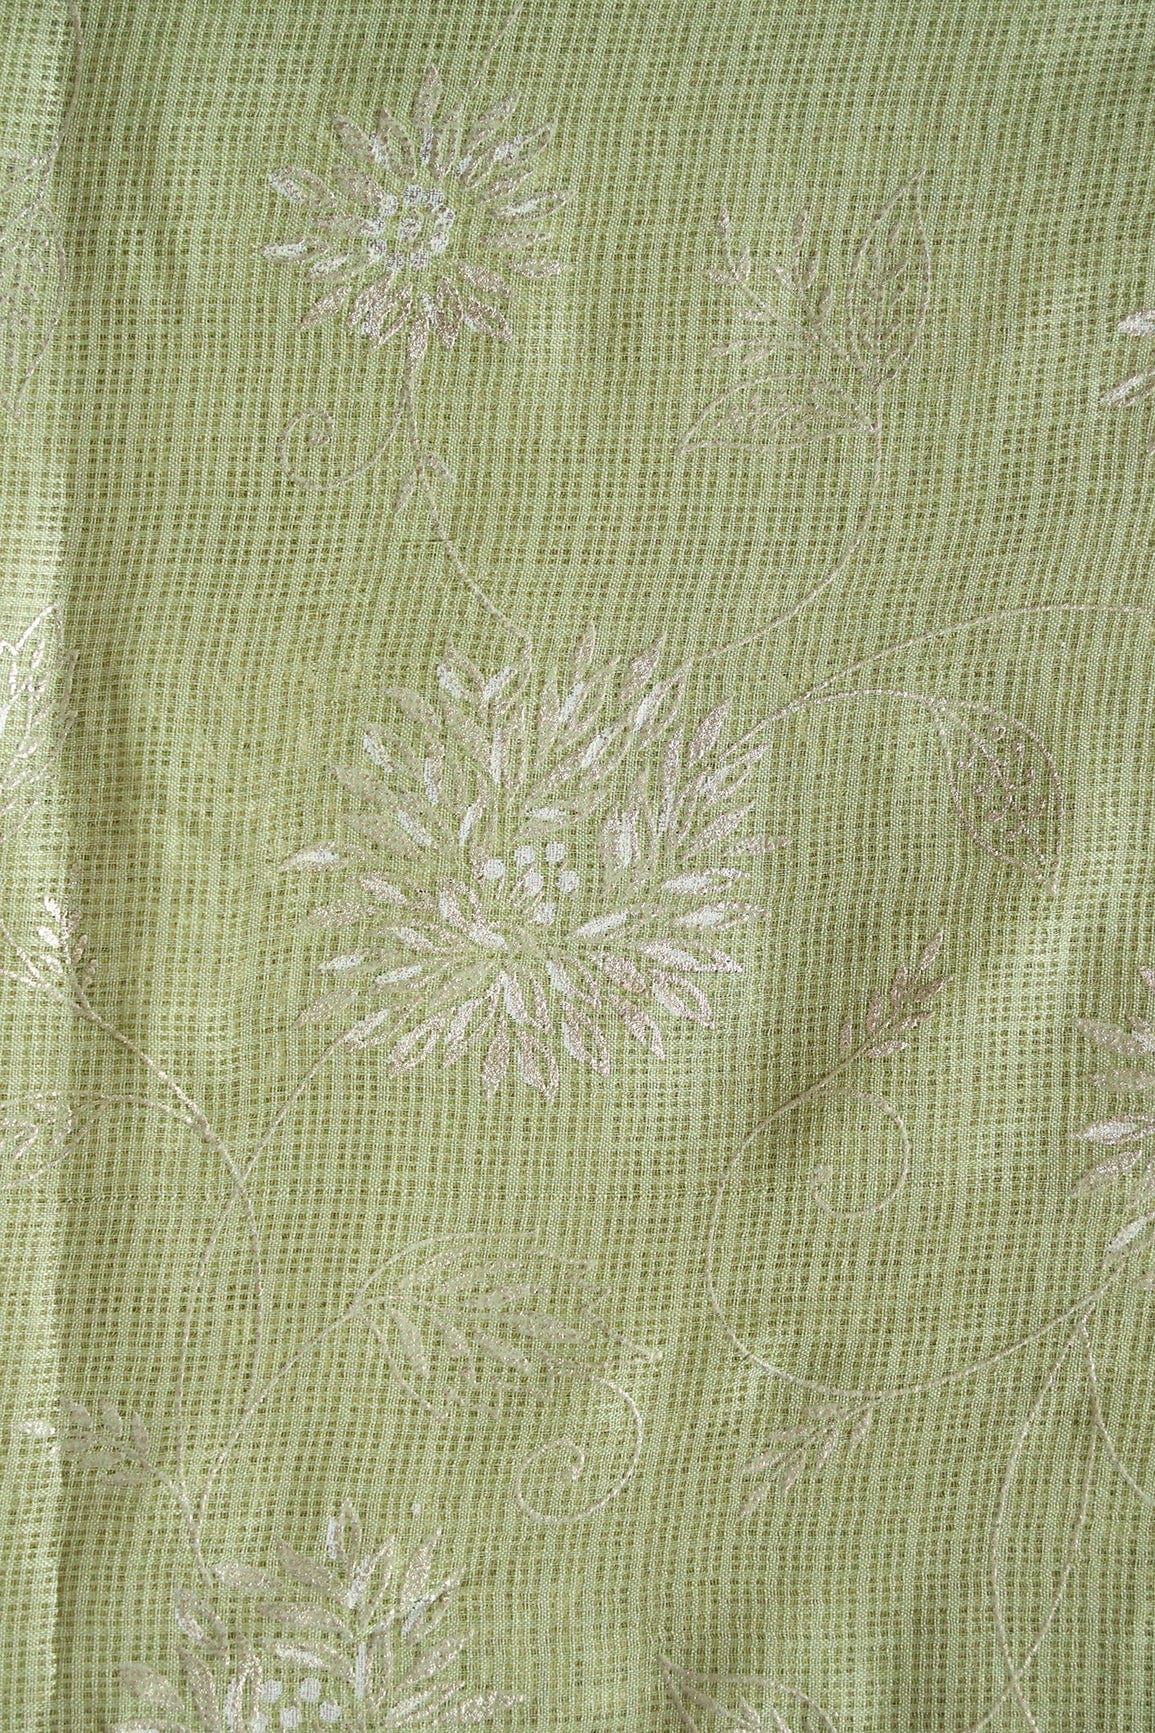 doeraa Prints White And Olive Floral Foil Print Kota Doria Net Fabric